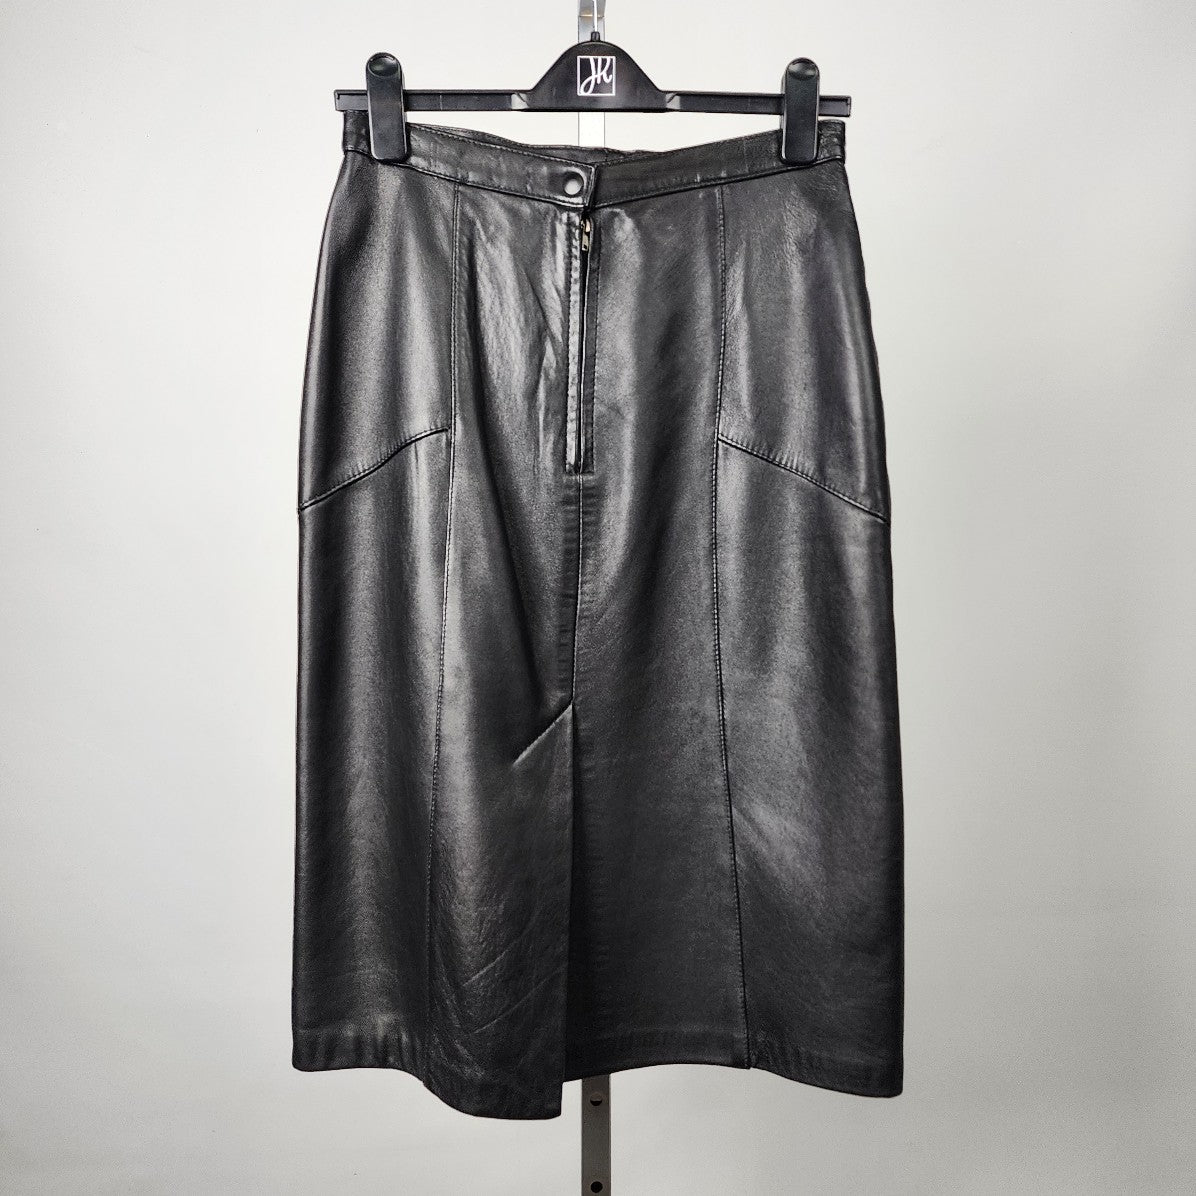 Vintage Black Leather Pencil Skirt Size S